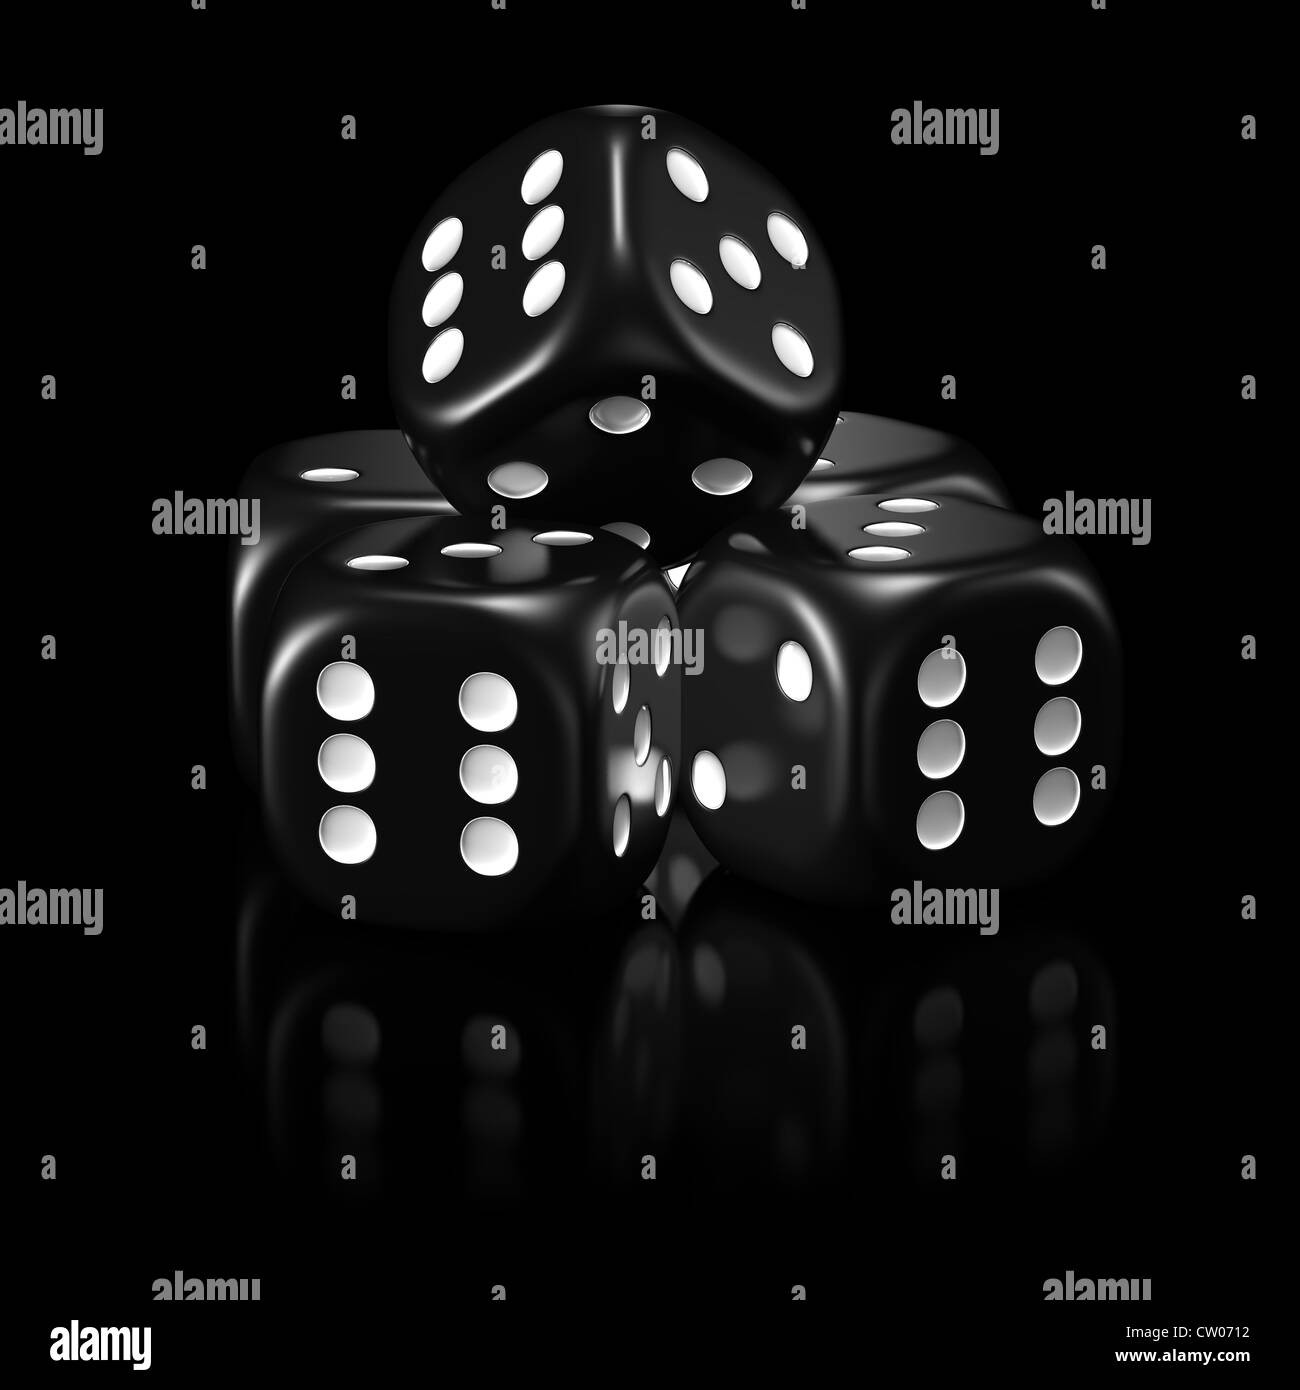 Black dice pile on black Stock Photo